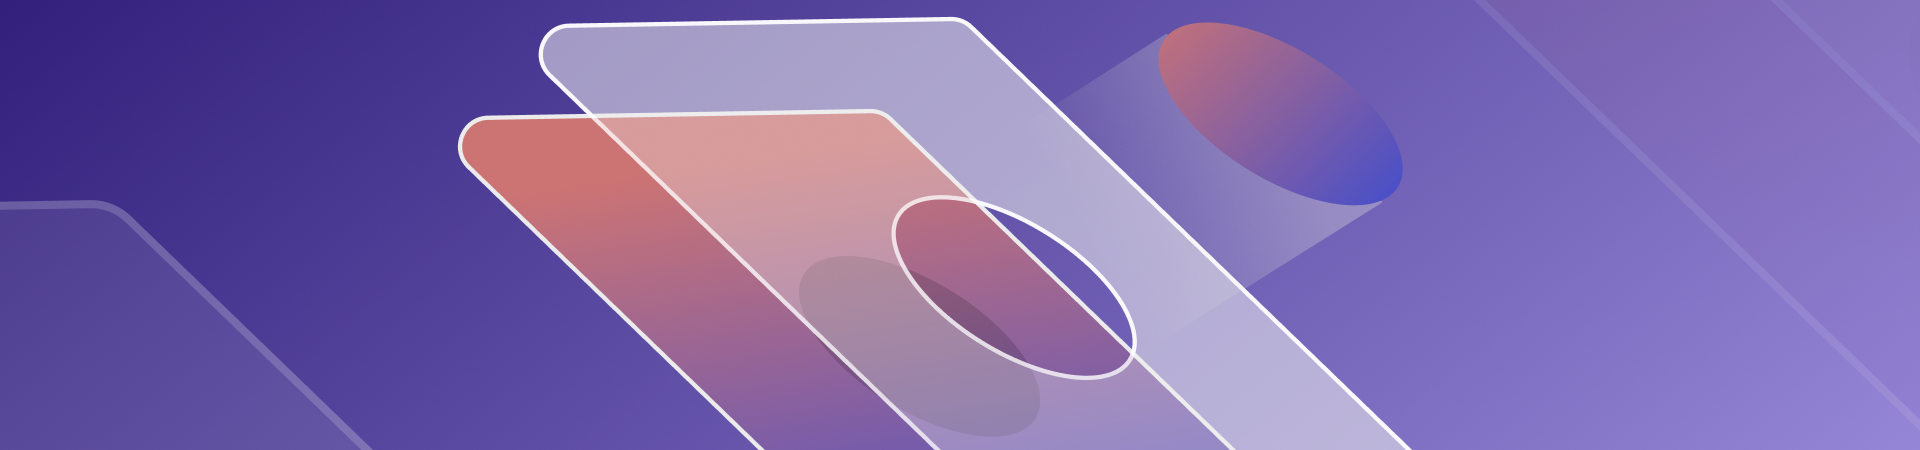 Geometric shapes on a purple background